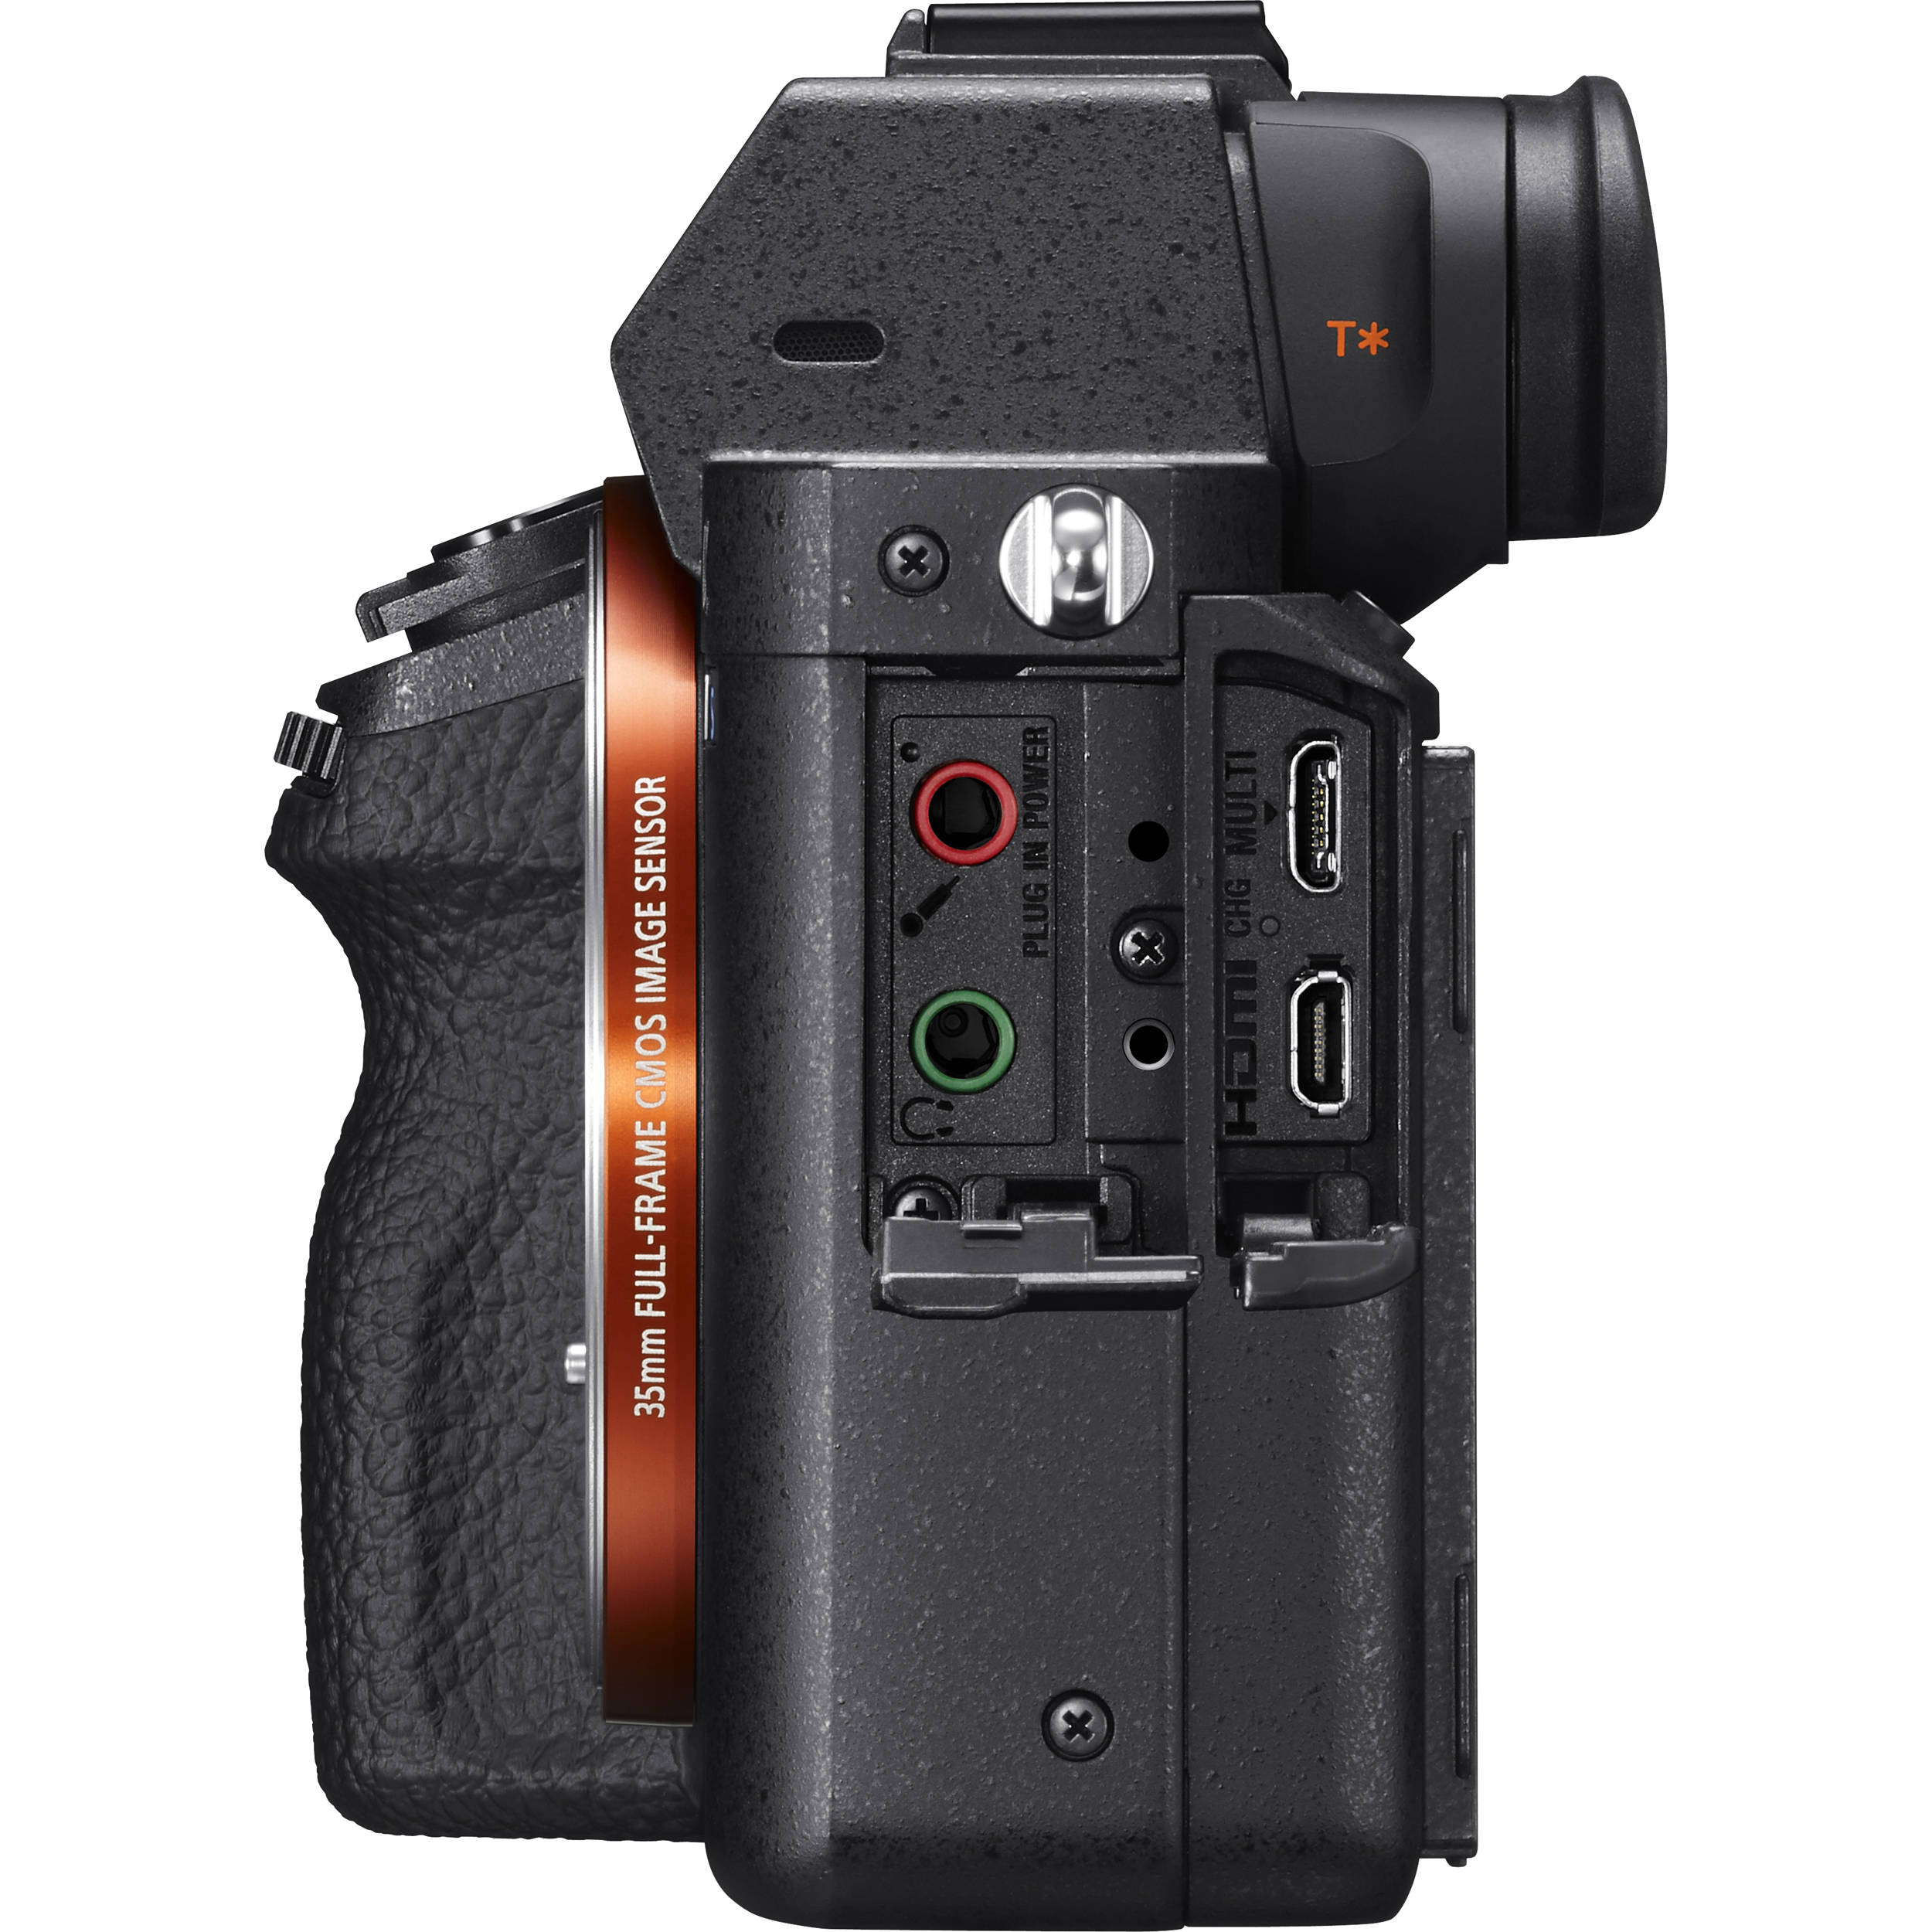 Sony Alpha a7S II Mirrorless Digital 4K UHD Camera (No Lens) Bundle  - Includes 8 Compatible Accessories